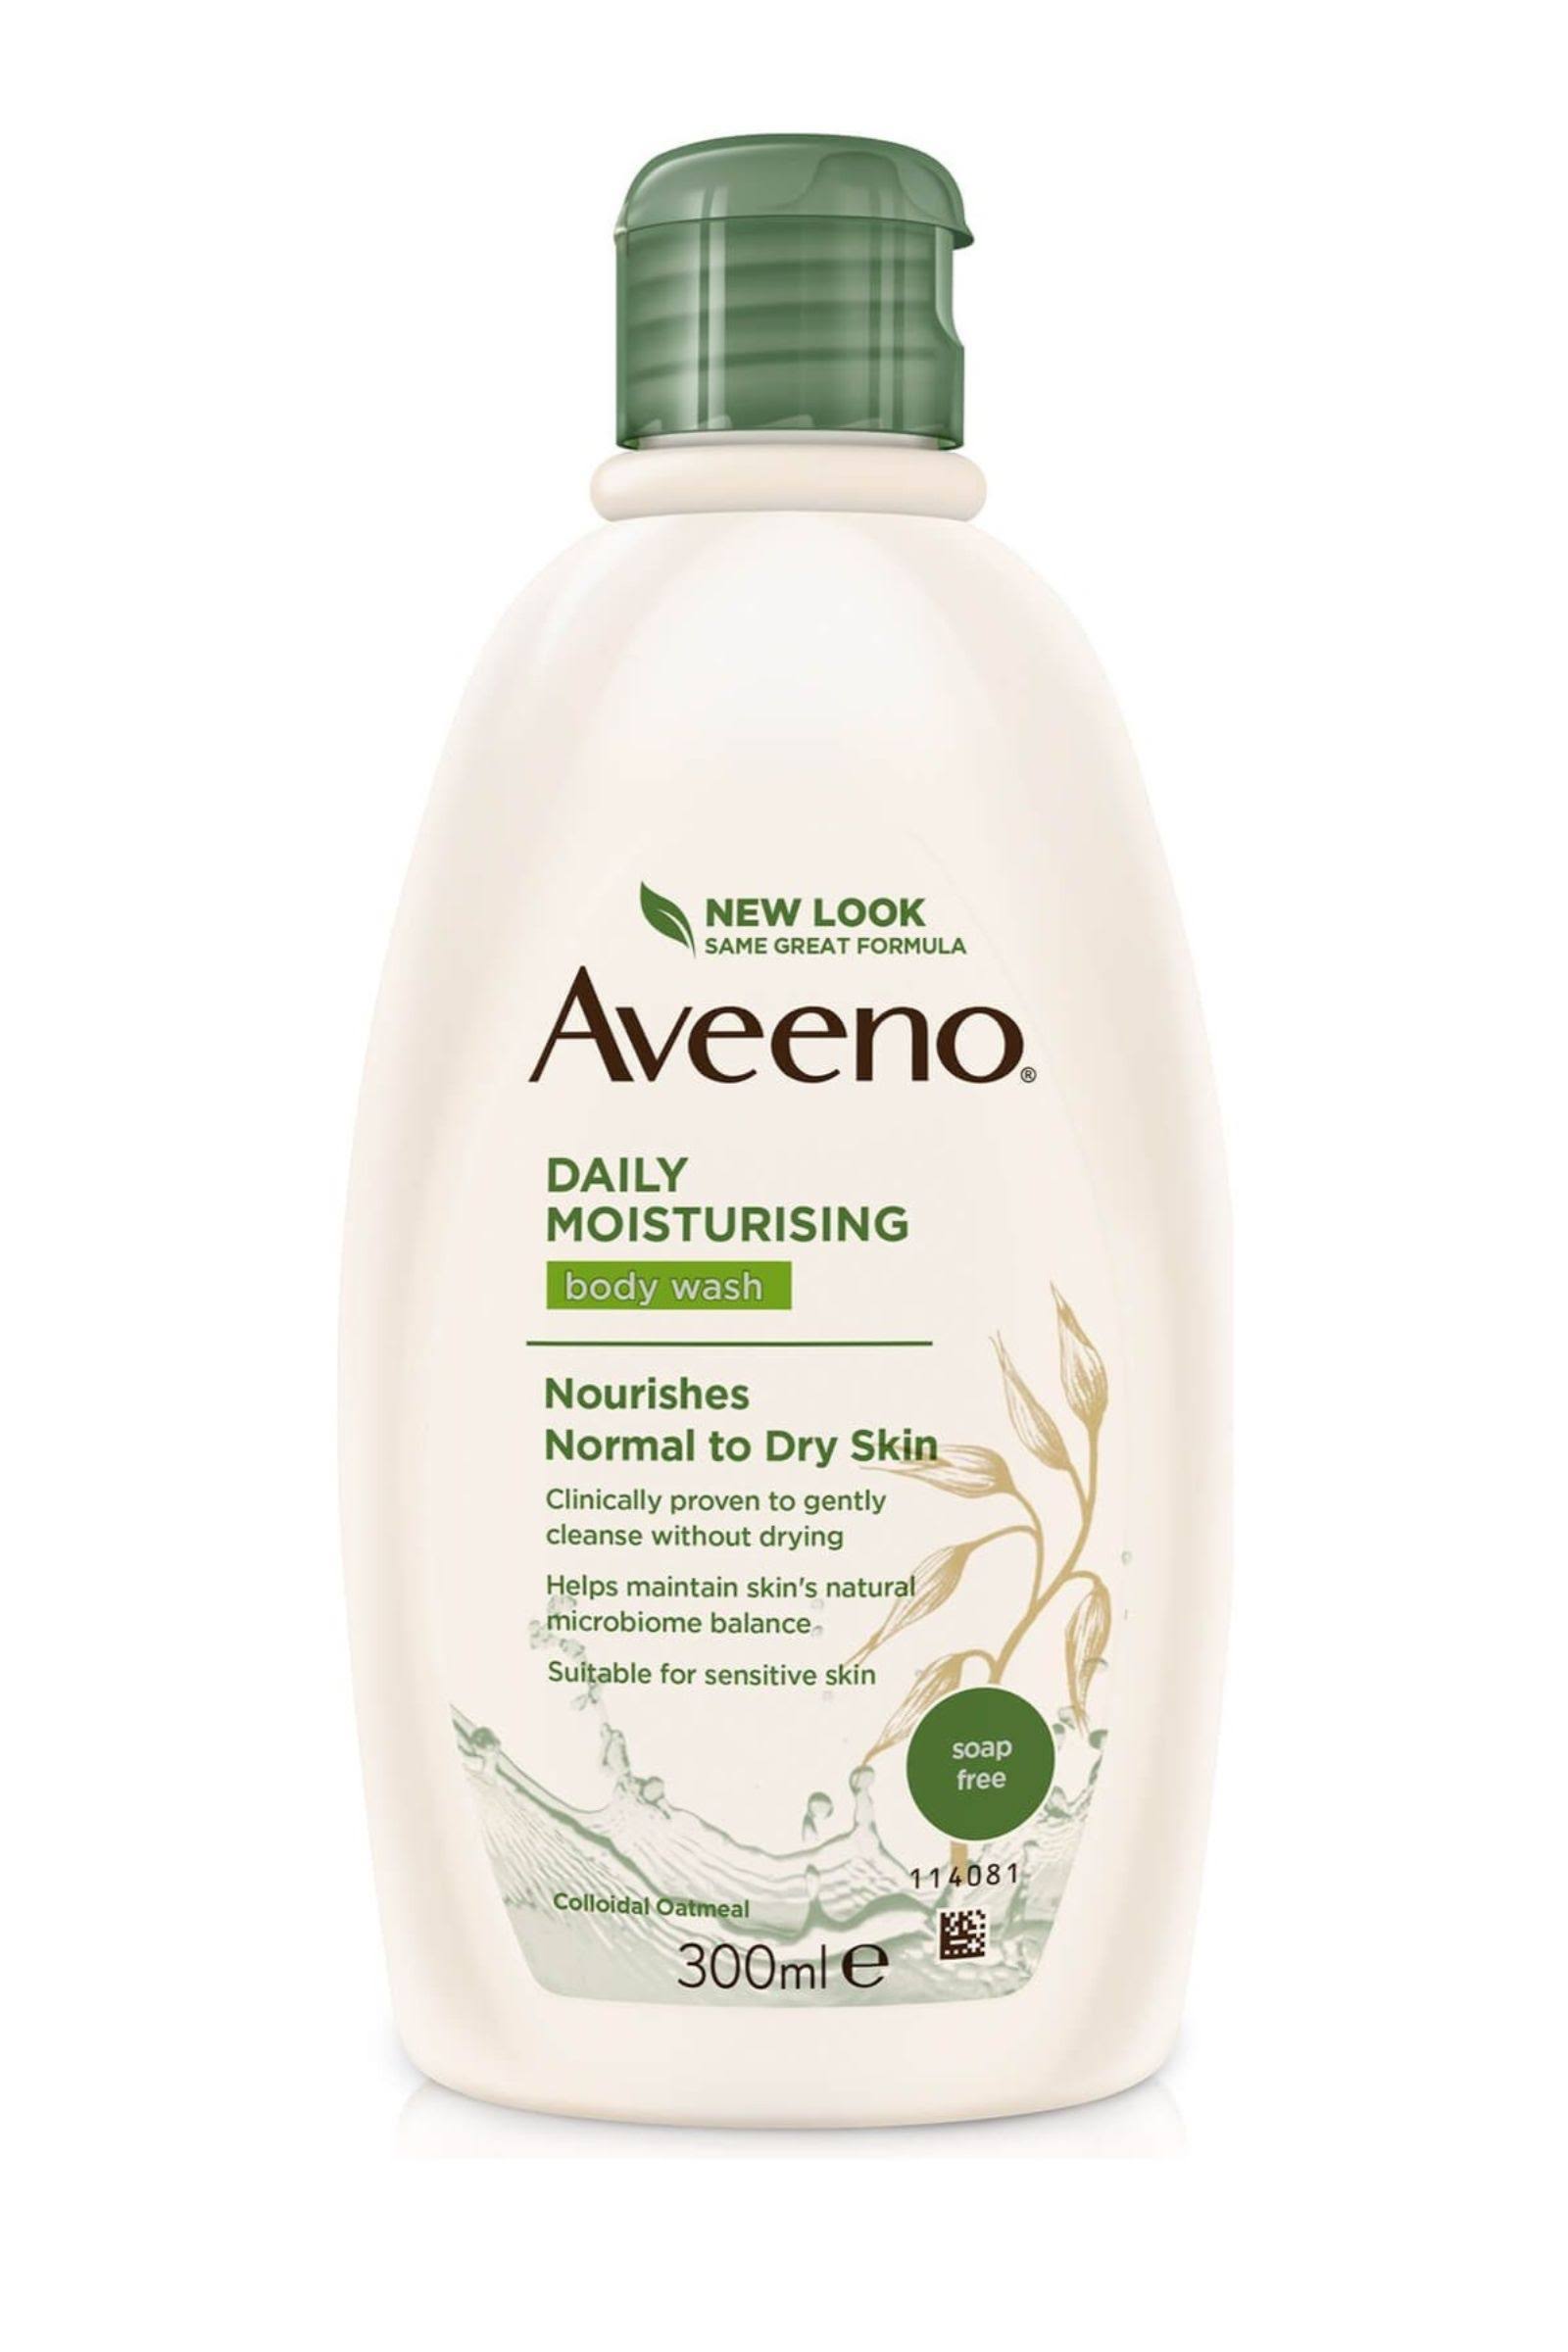 Aveeno Daily Moisturizing Body Wash - 300ml